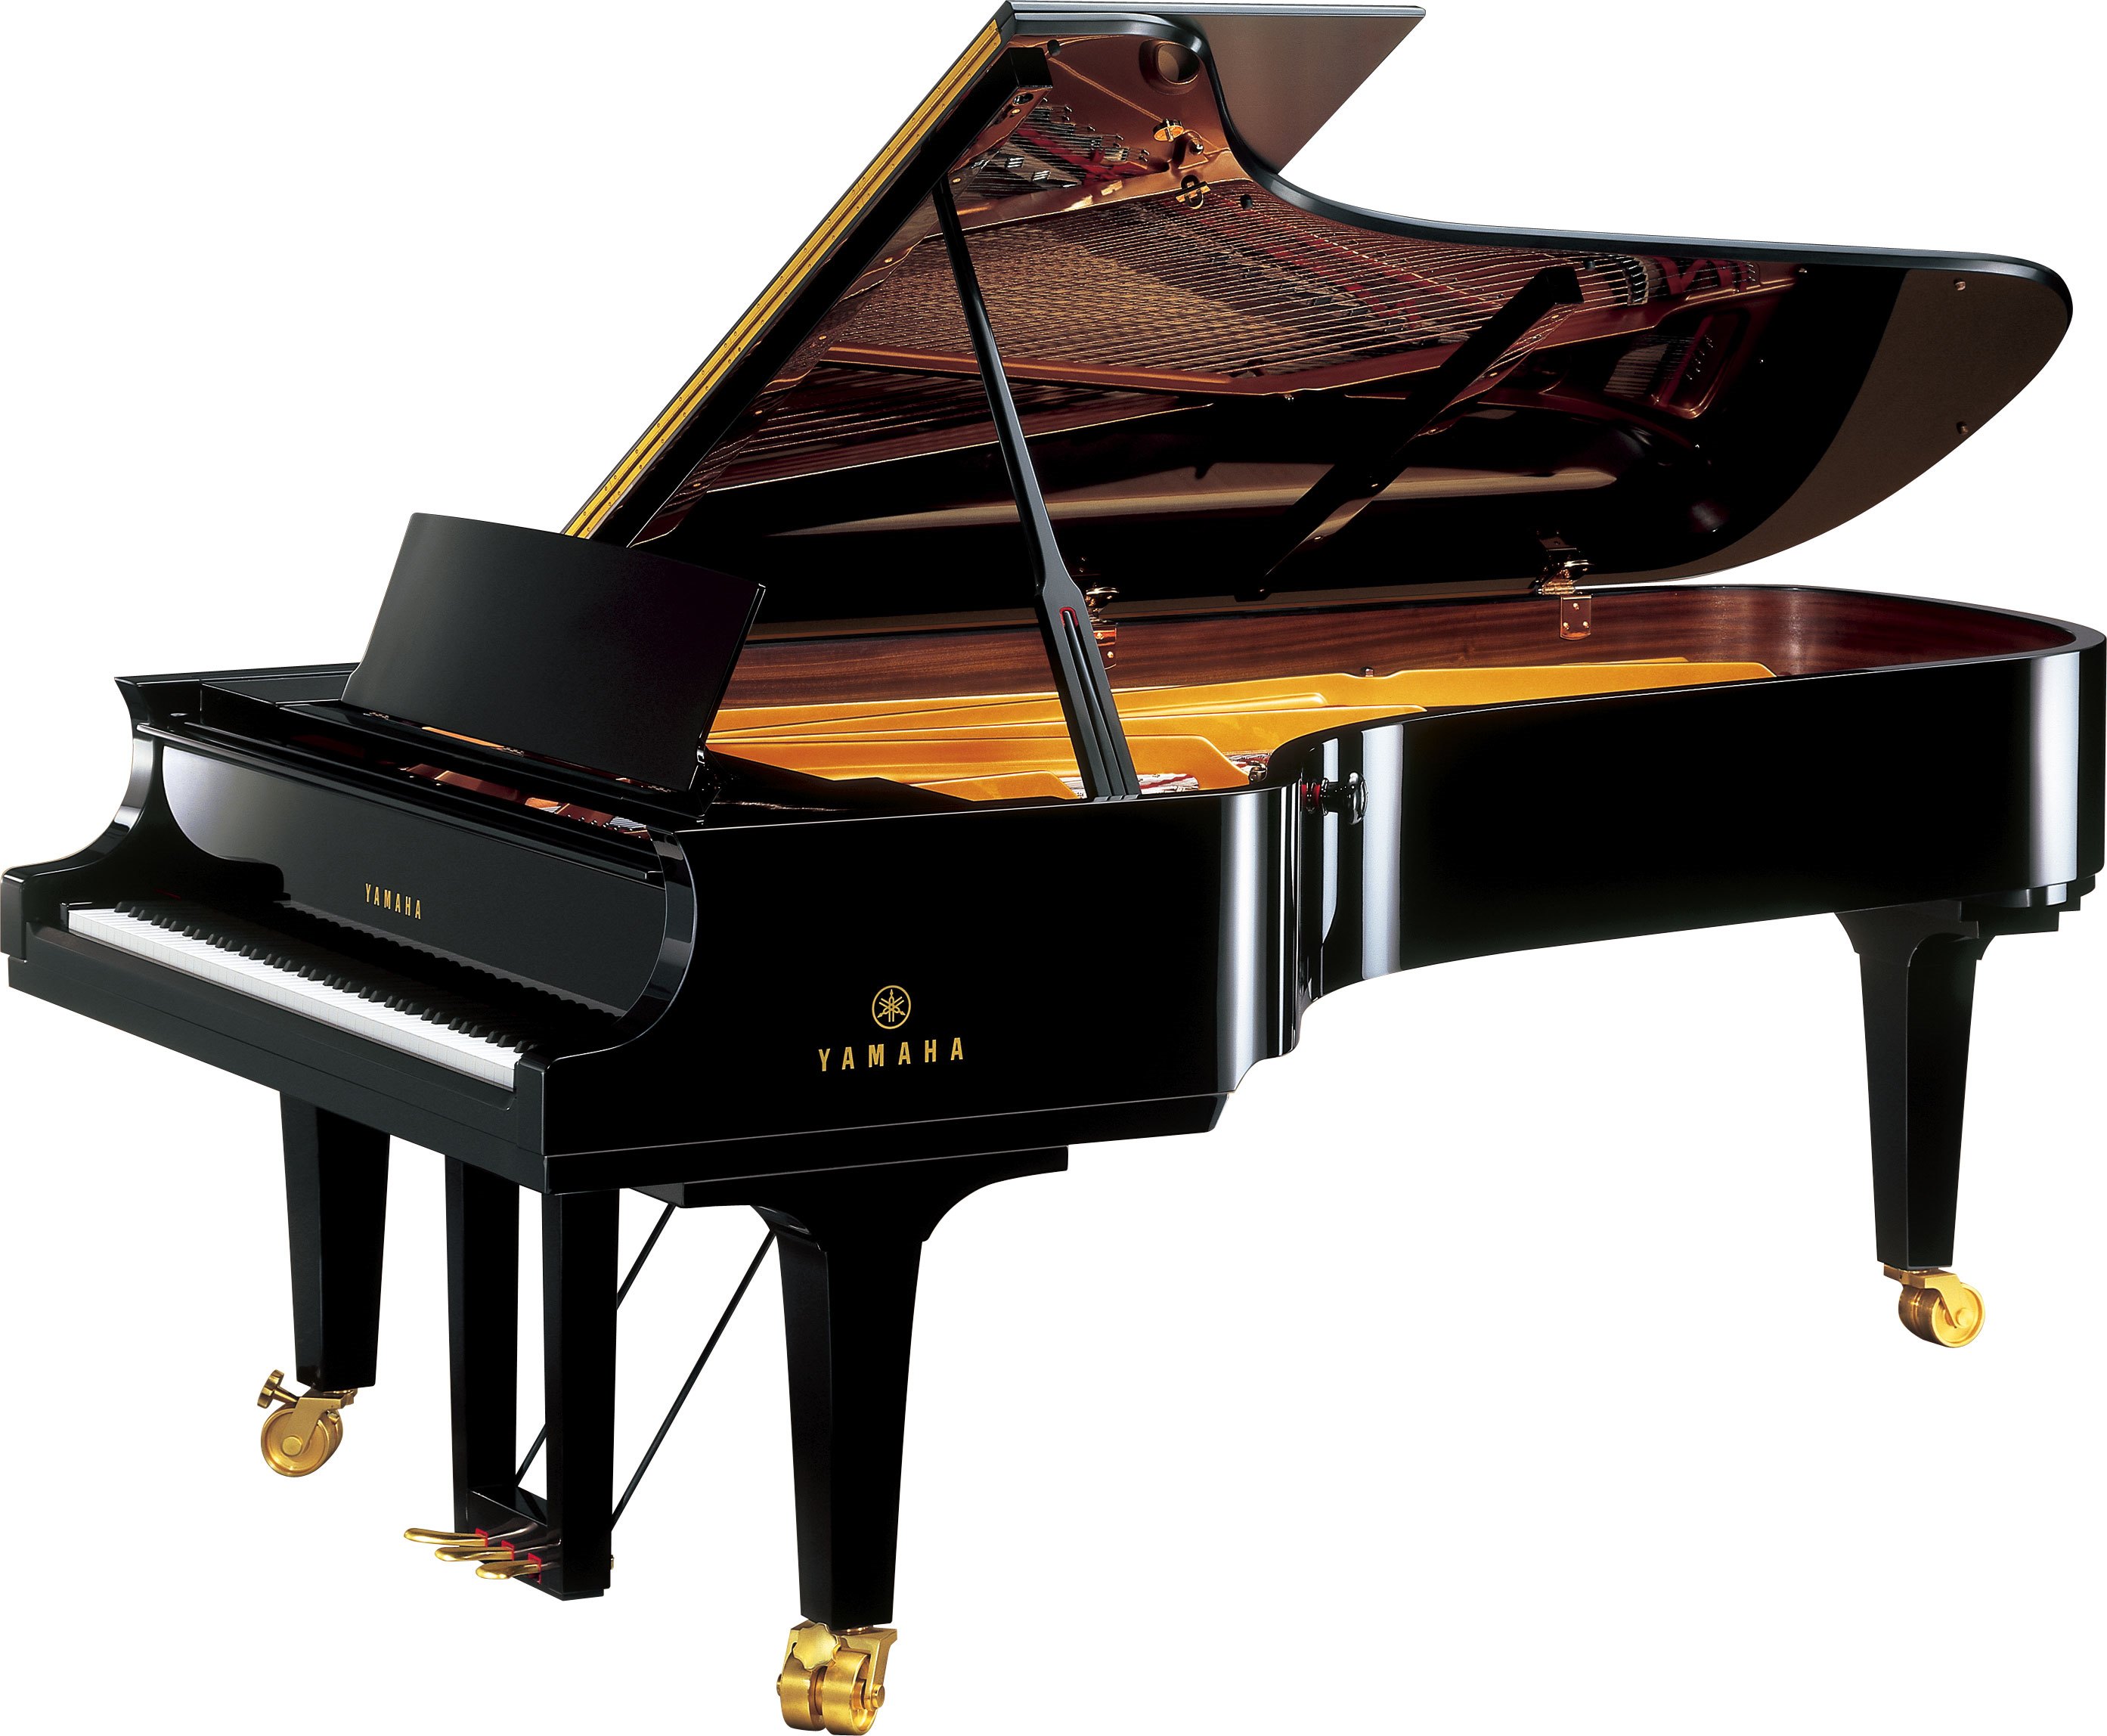 YAMAHA-CFX-concert-grand-piano-for-sale